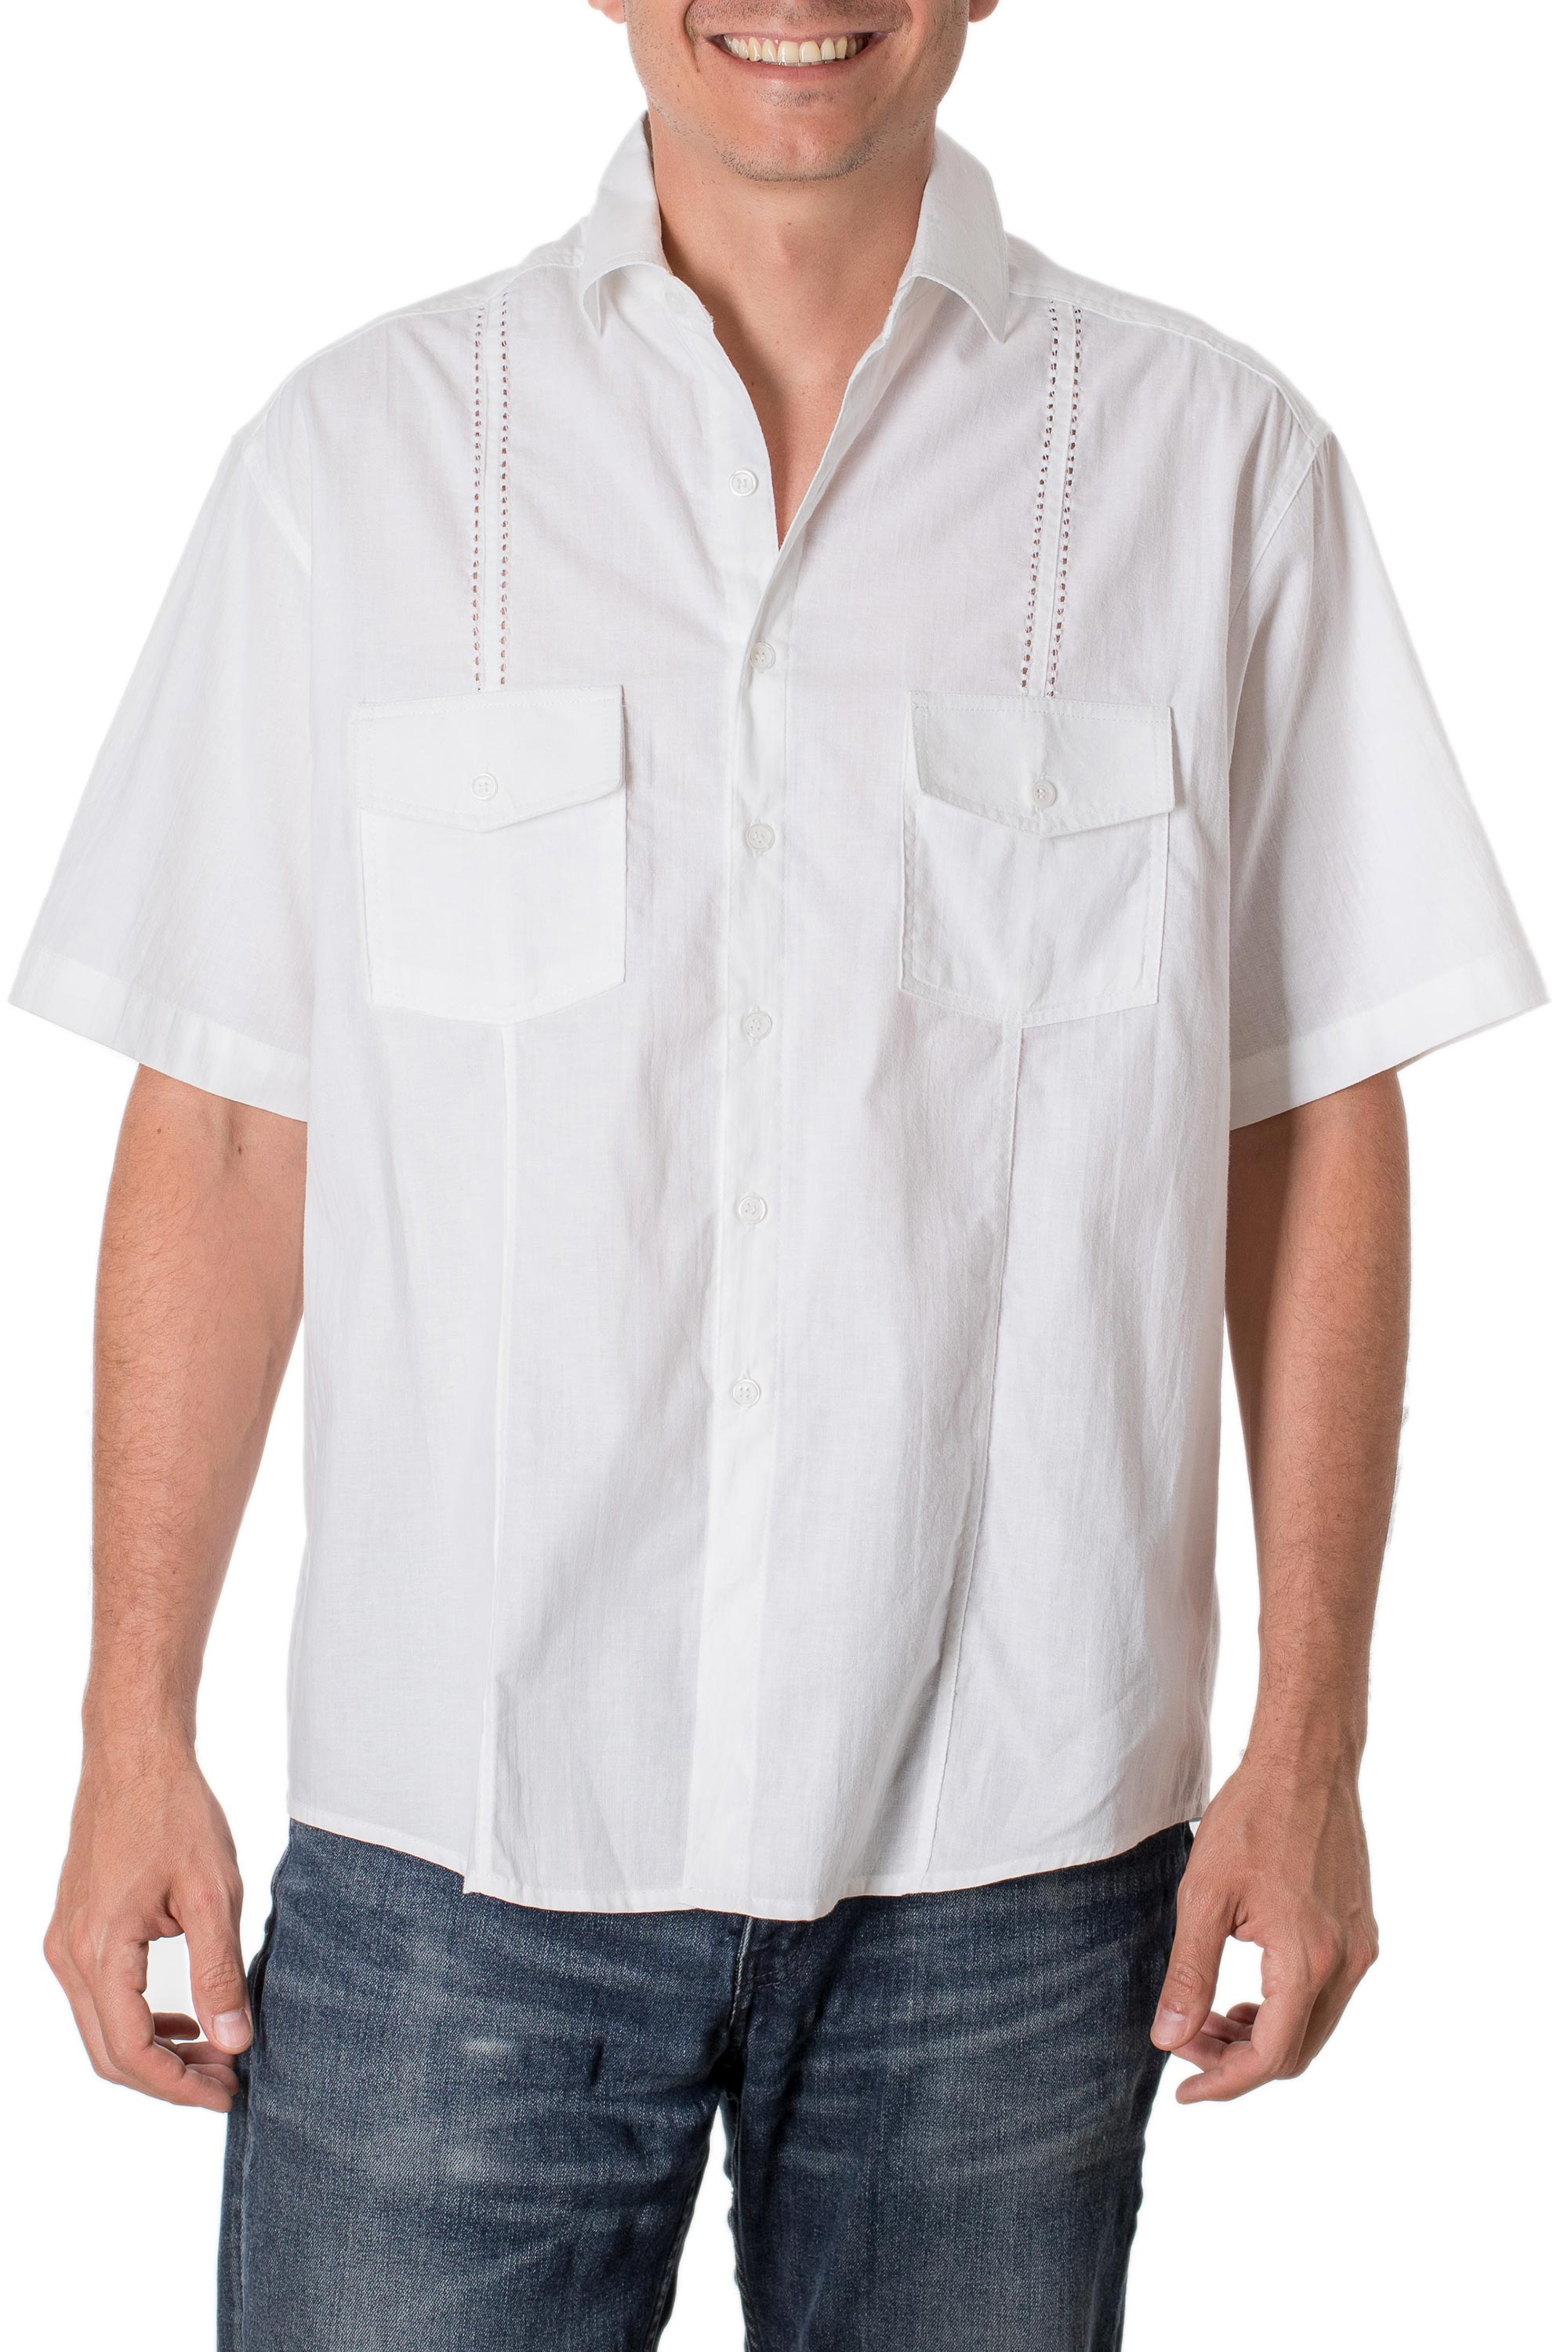 White Men's Cotton Guayabera Shirt with Chest Pockets - Salvadoran ...